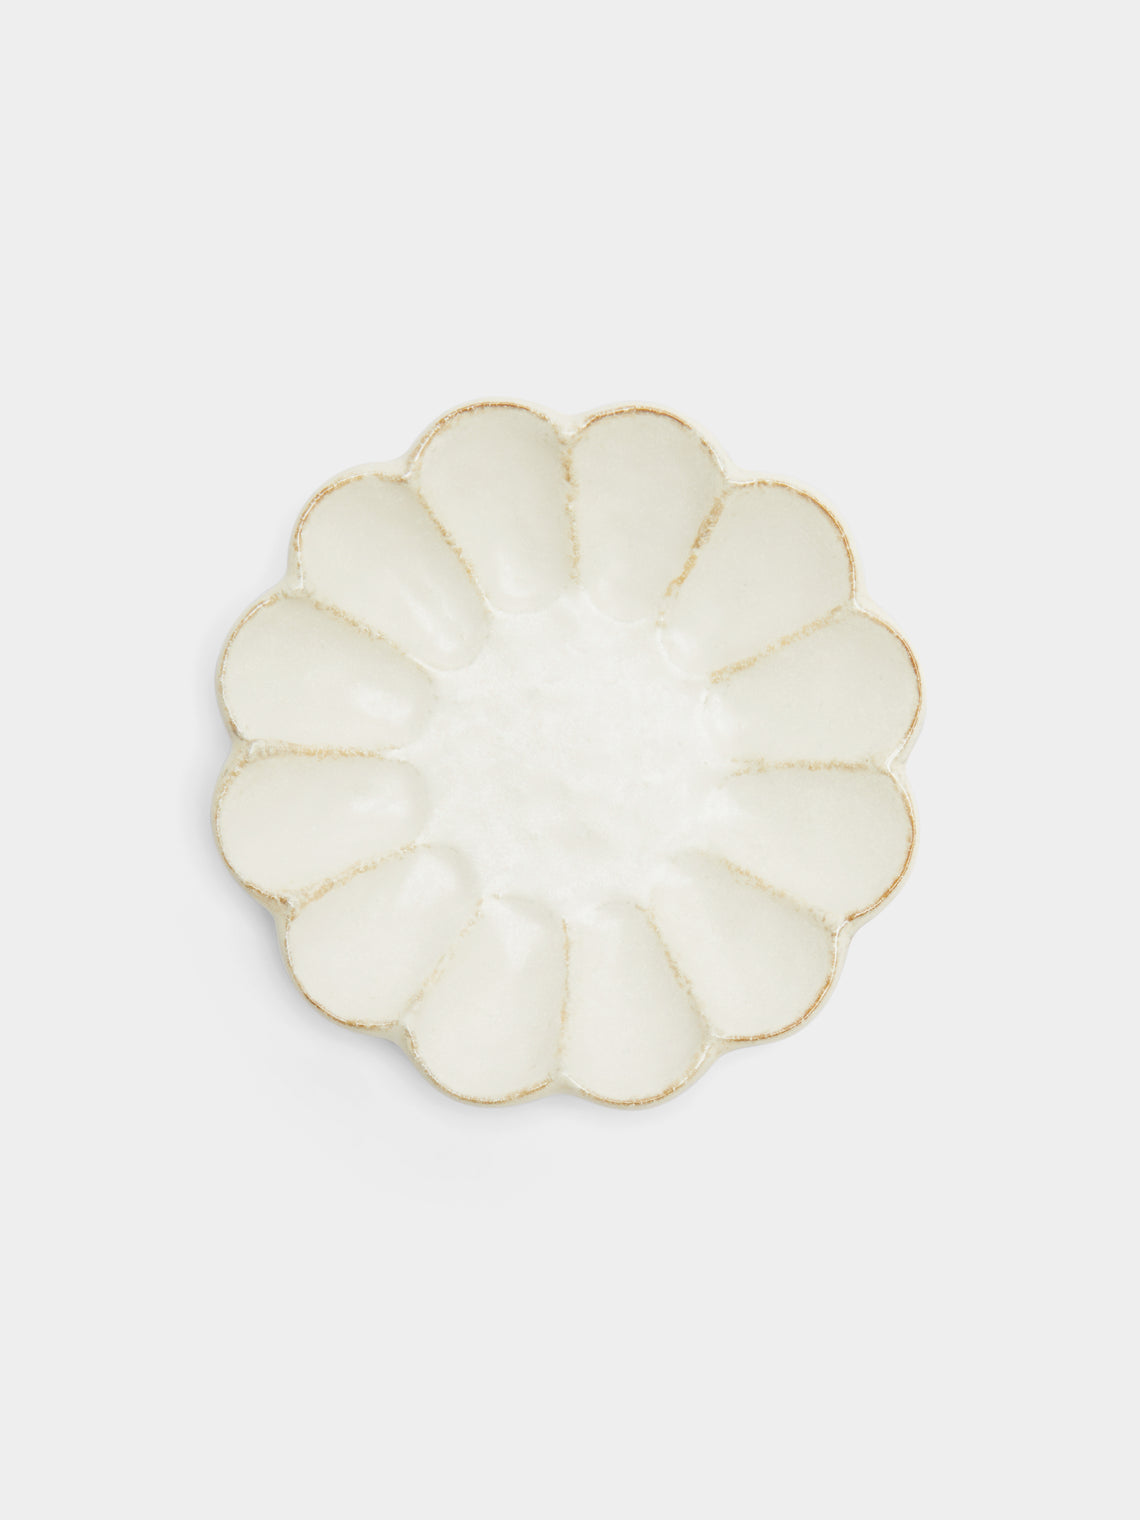 Kaneko Kohyo - Rinka Ceramic Bread Plates (Set of 4) - White - ABASK - 